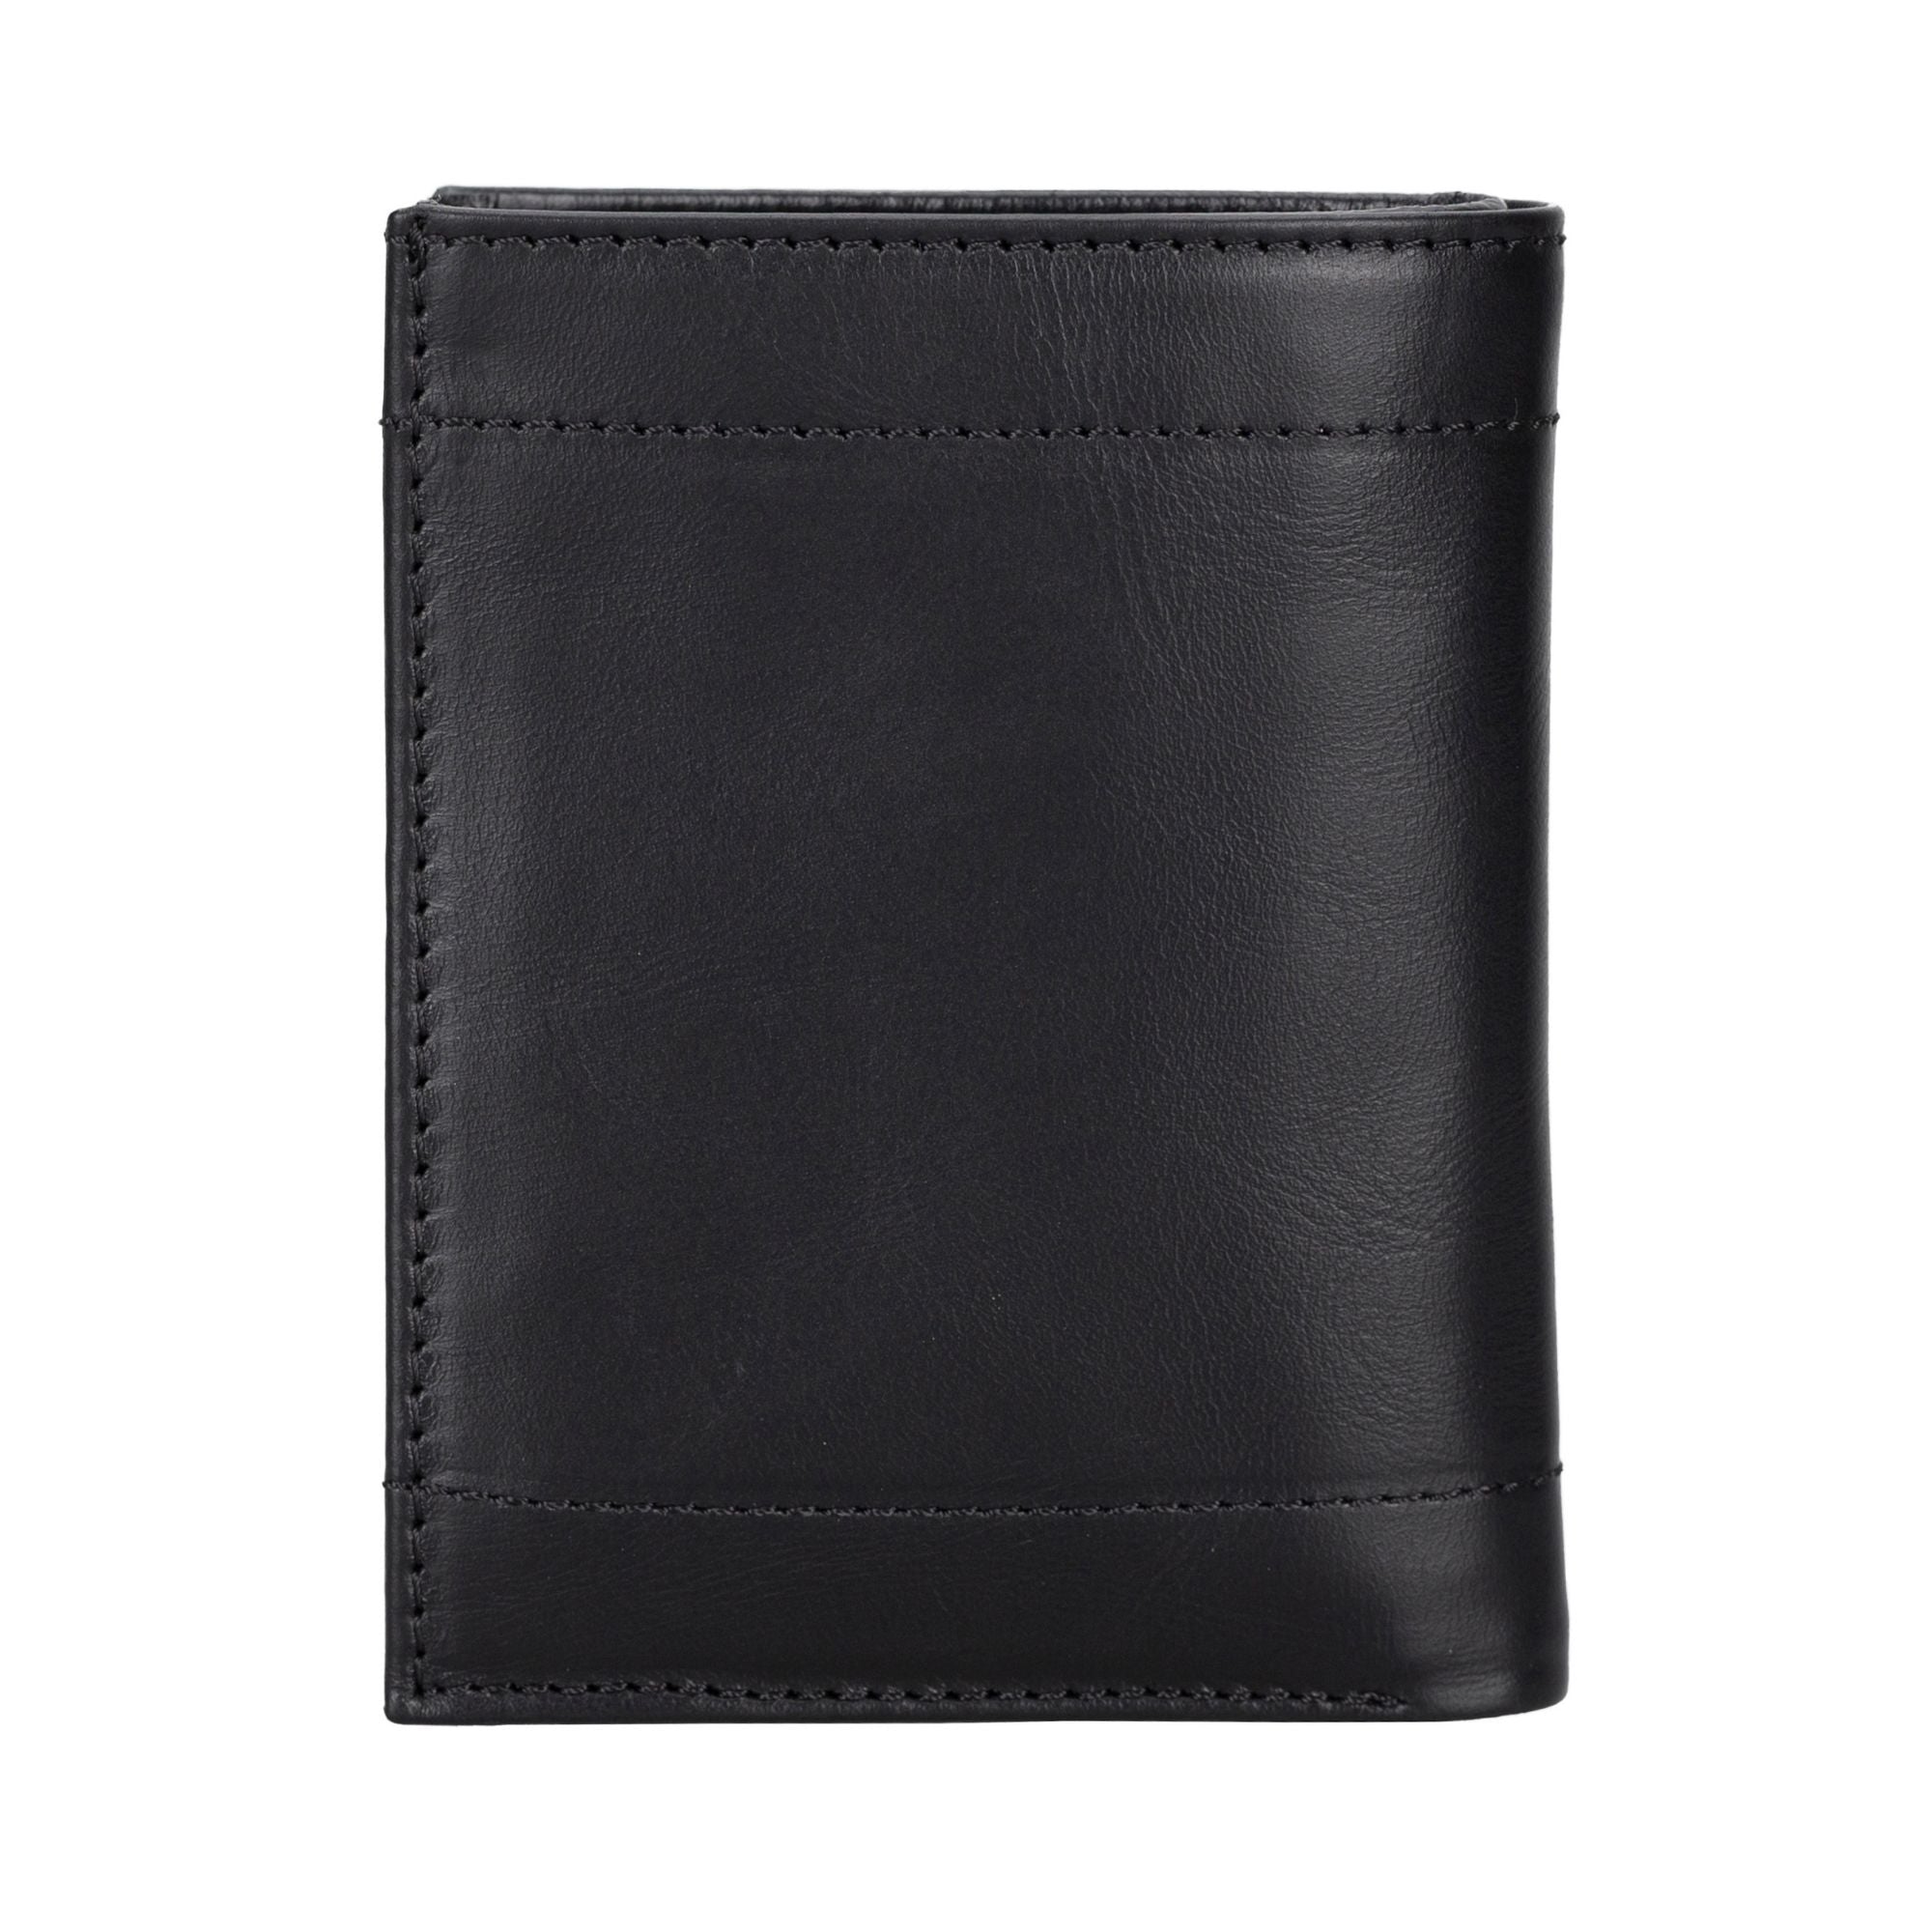 Glendo Apple AirTag Slot Leather Wallet, Handcrafted, Unisex - Black - TORONATA